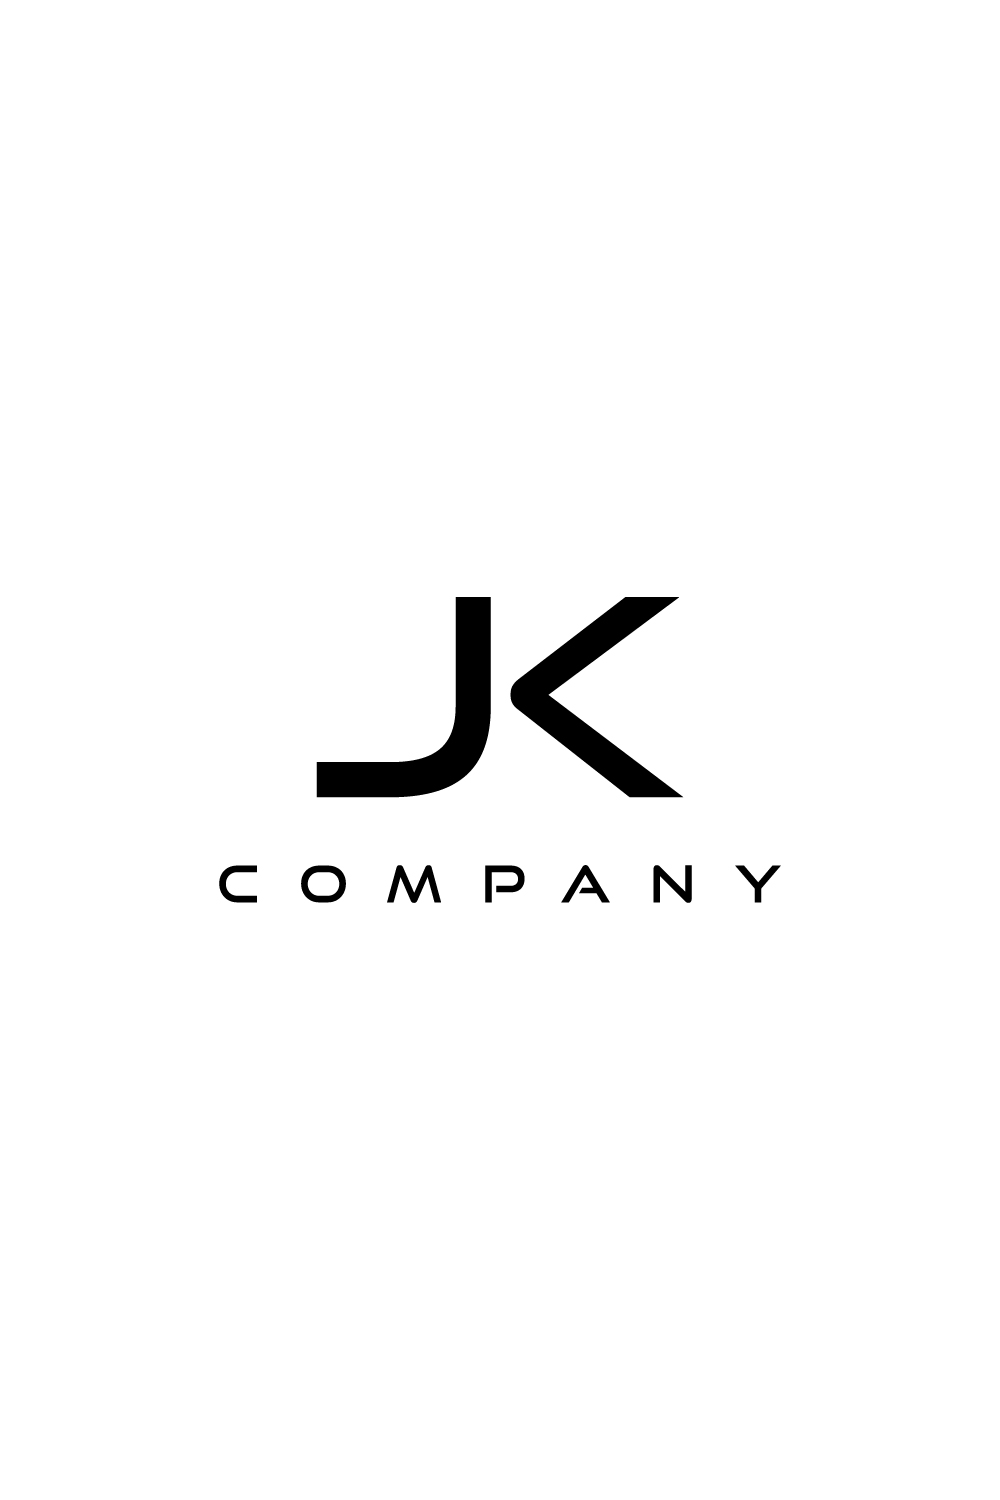 Abstract JK letter mark logo with a modern look. - MasterBundles